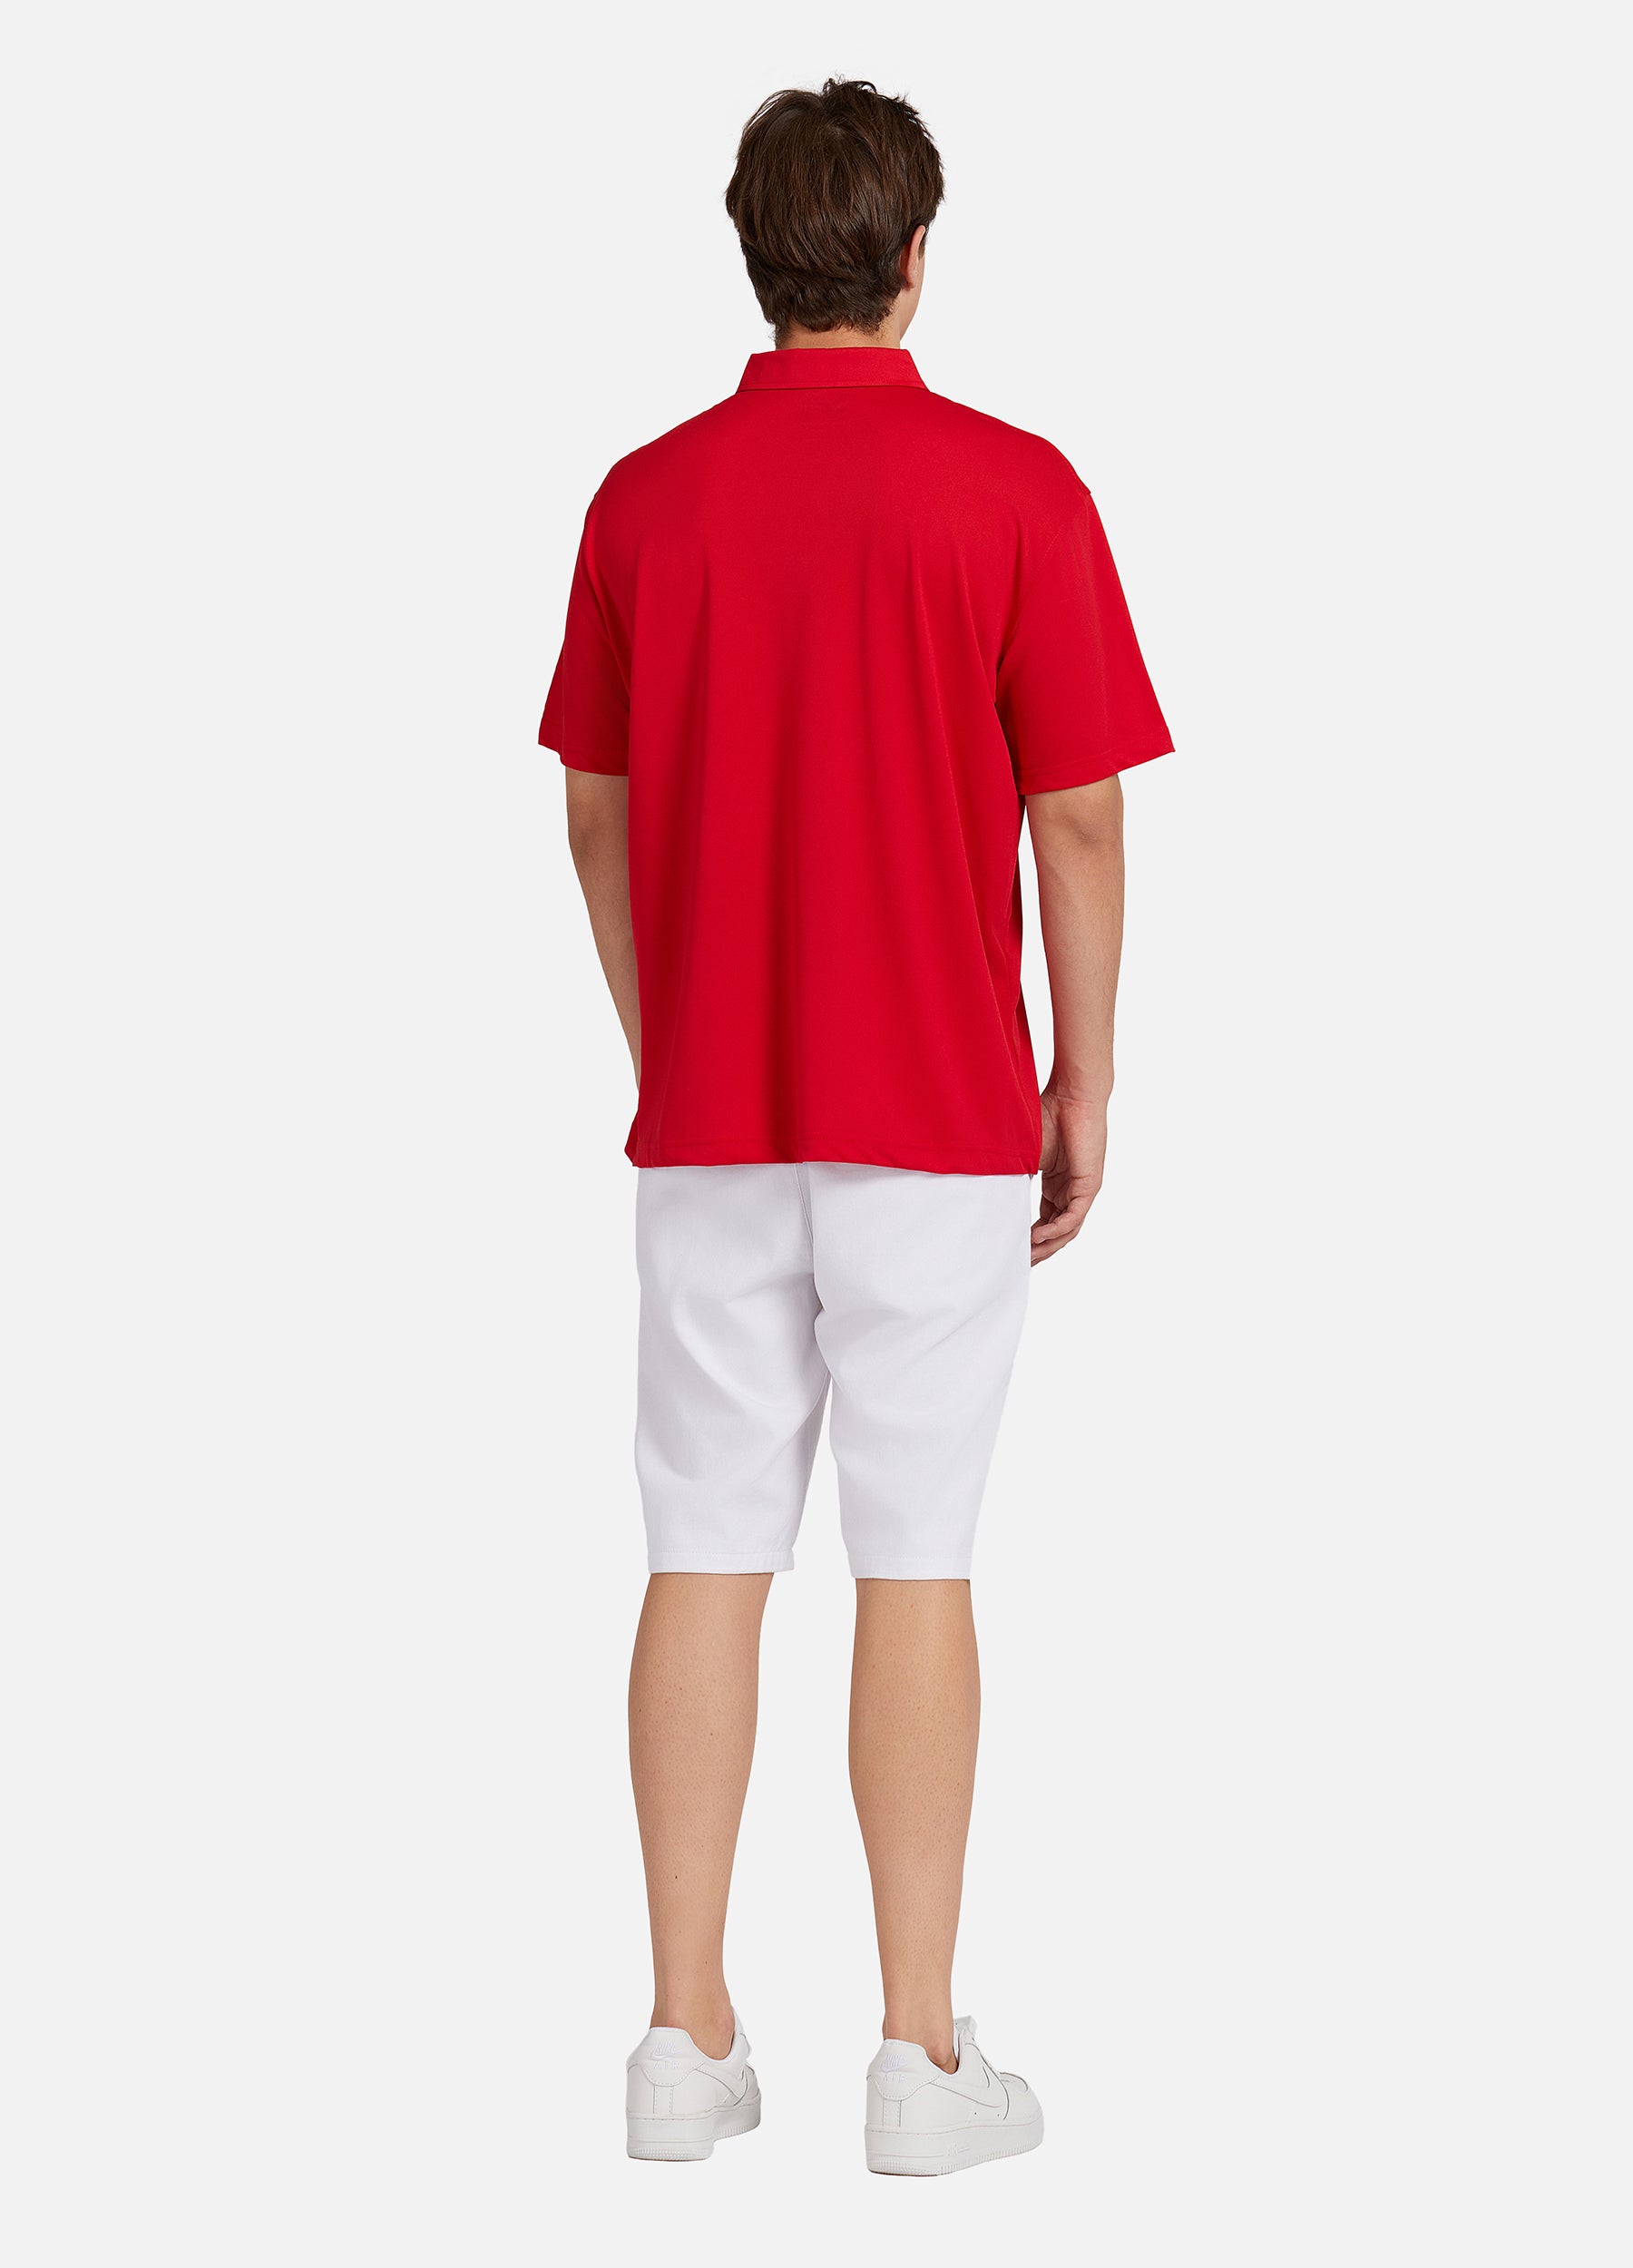 1PA1 Men's Short Sleeve Polo Shirts Moisture Wicking Quick Dry Golf Shirts